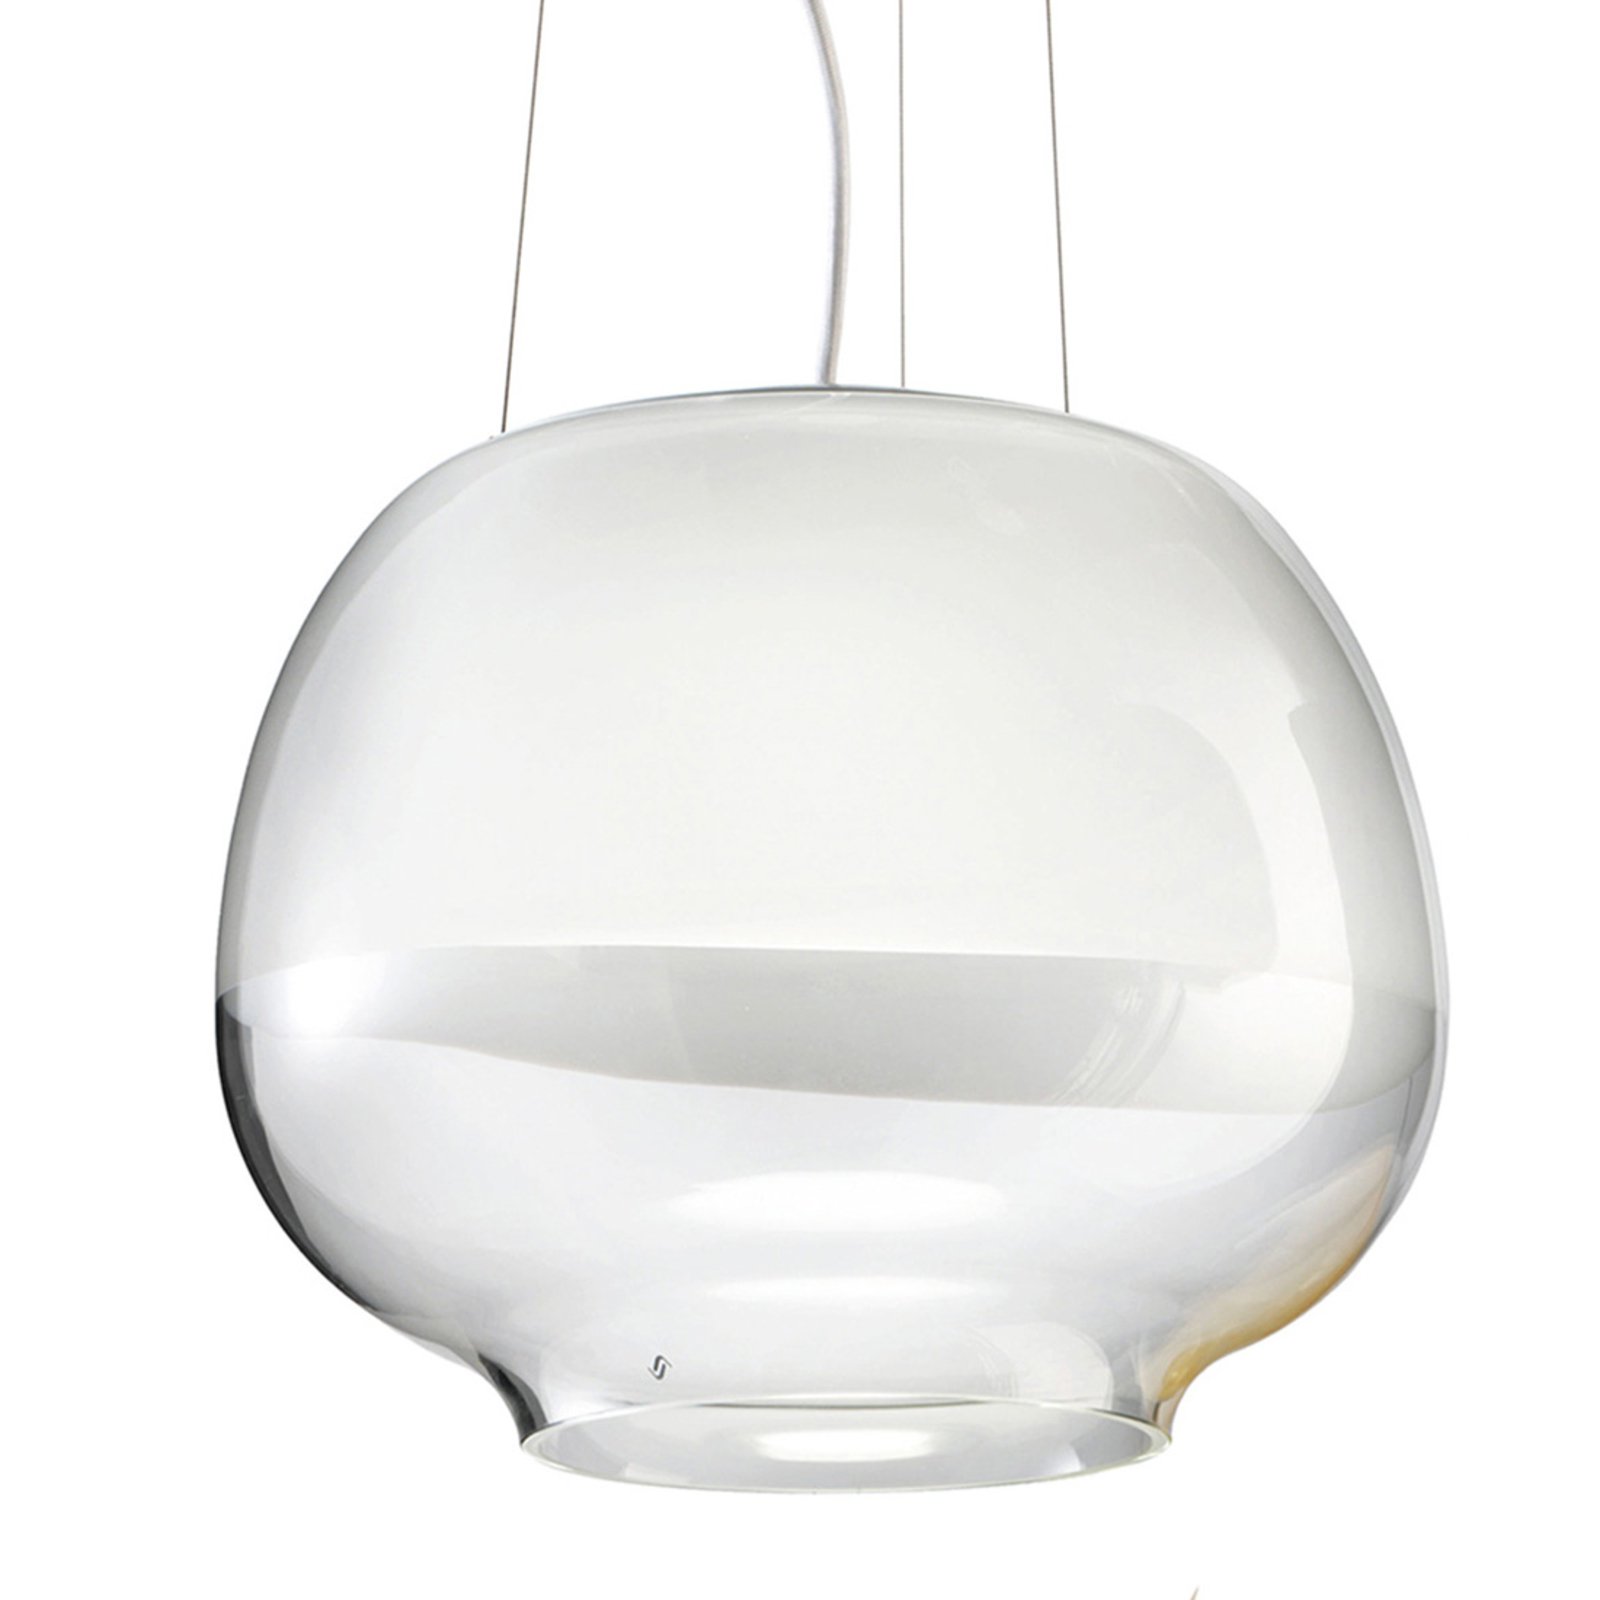 Designerska lampa wisząca Mirage SP, biała